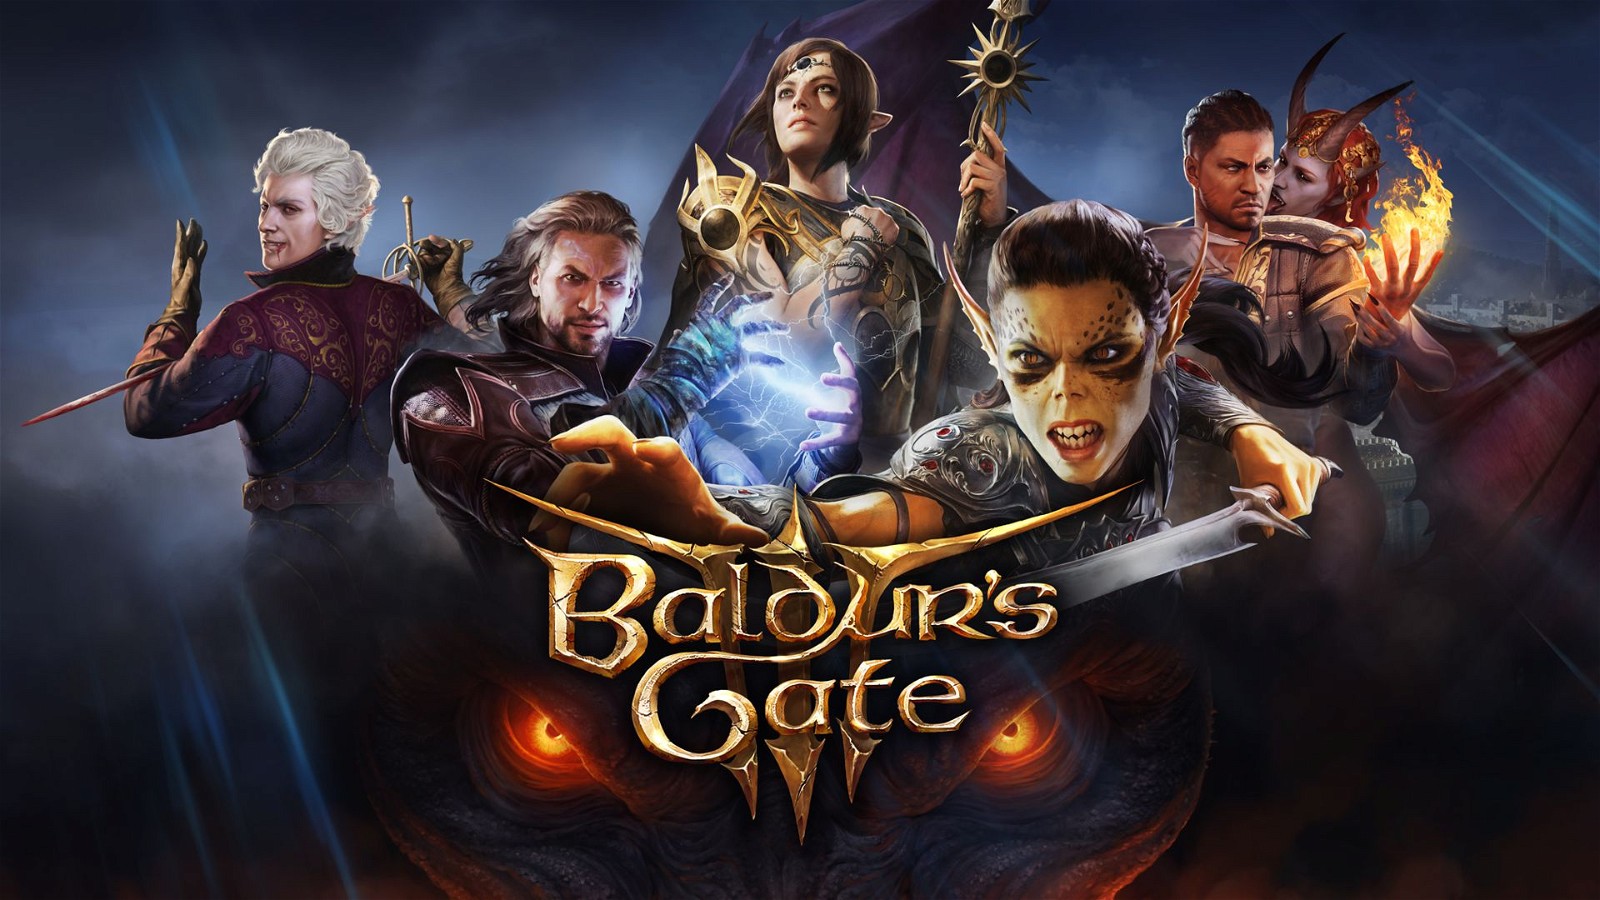 Baldur's Gate 3 bug made its characters too horny